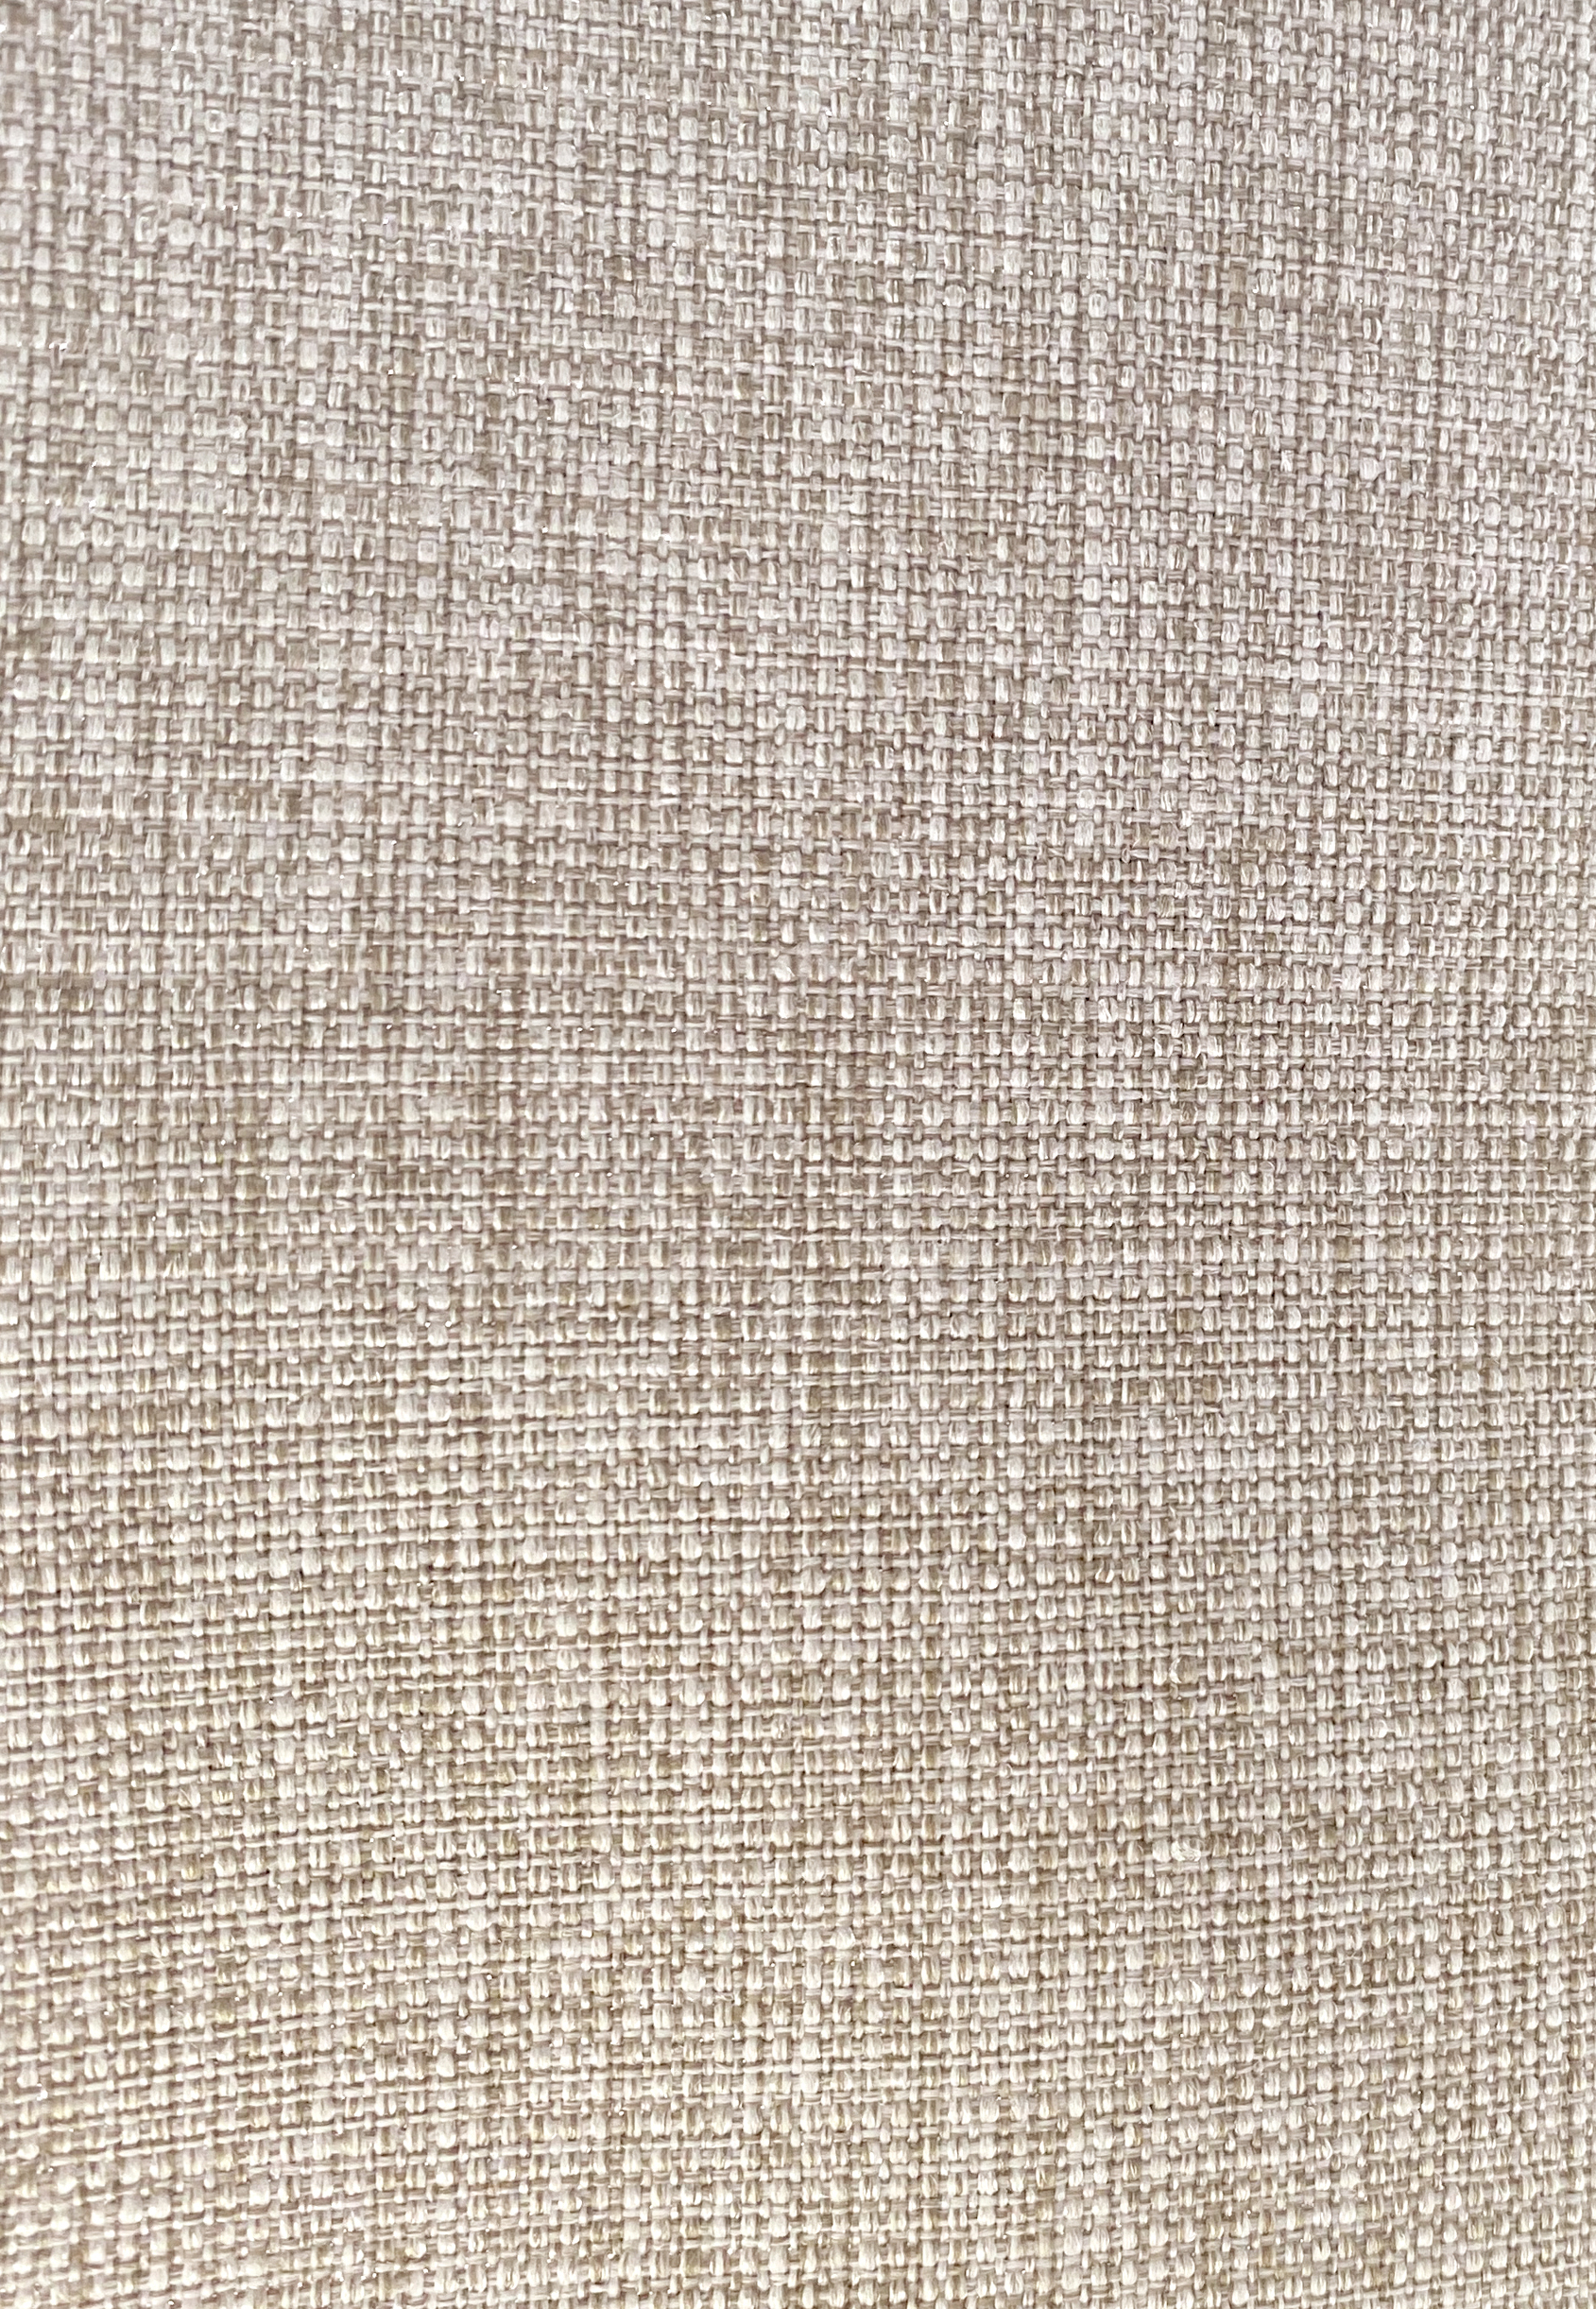 Lo-Fi House Select Curtains　Blackout Blackout Linen - Latte Heat Insulation Blinds & Shades Child Safety／Cordless Blinds & Shades Blackout Blinds & Shades Motorized Blinds／Smart Blinds & Shades